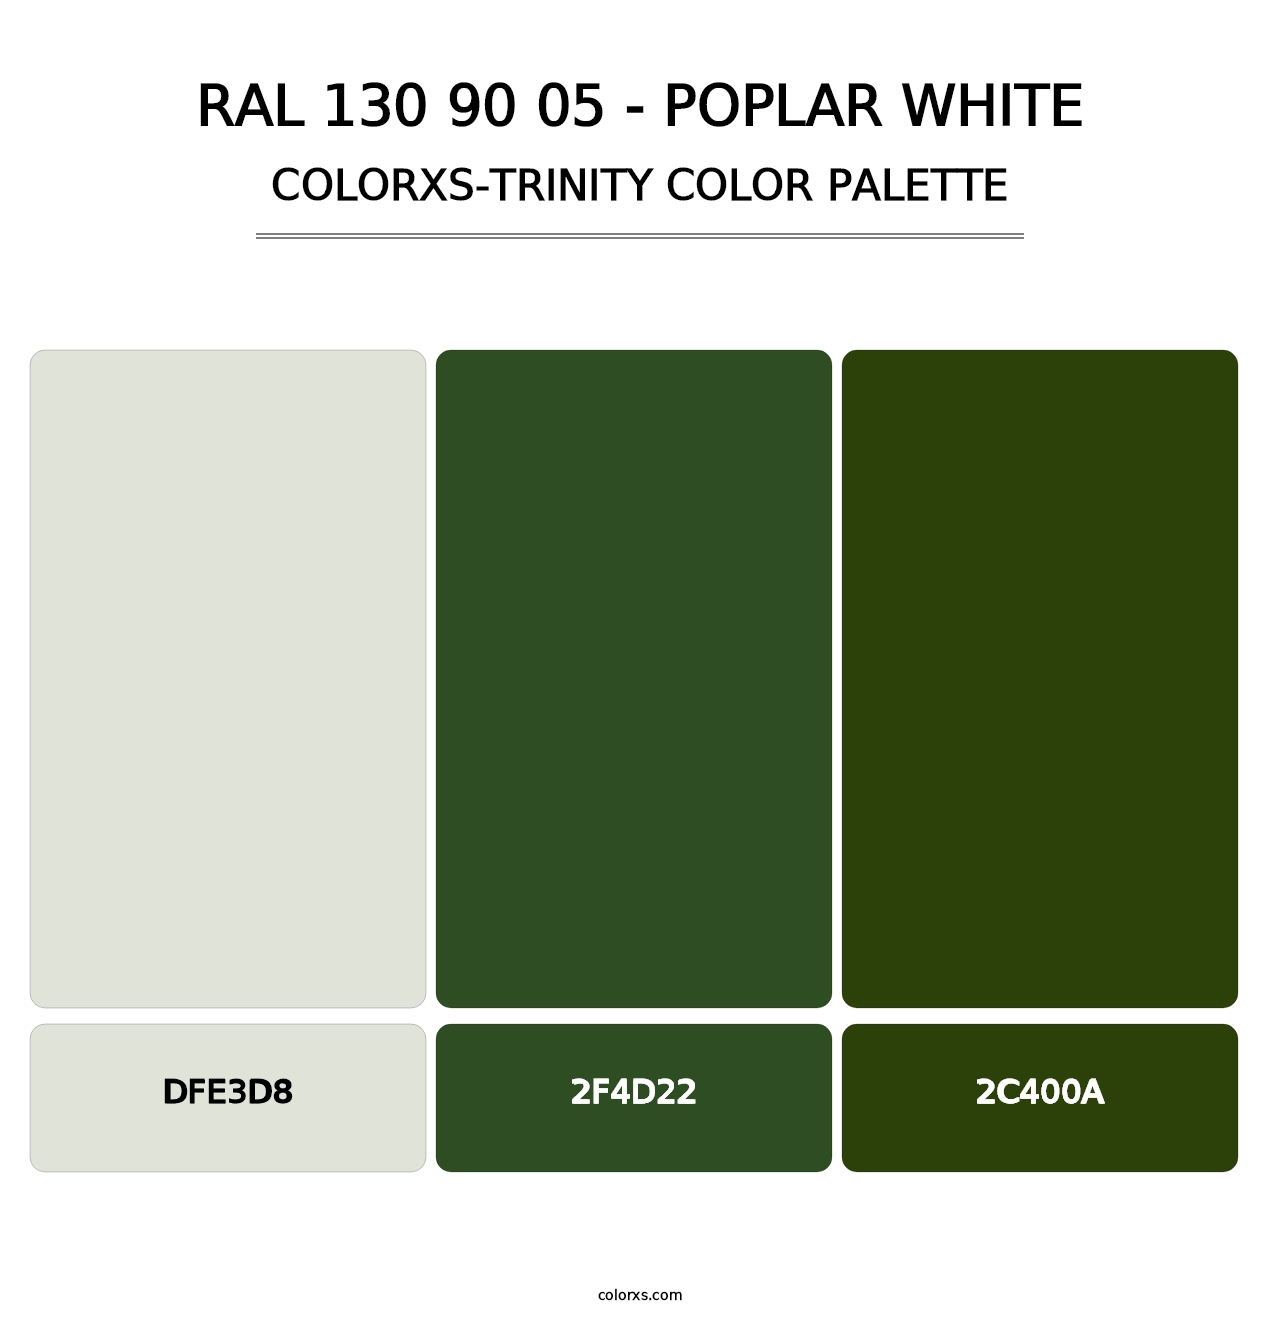 RAL 130 90 05 - Poplar White - Colorxs Trinity Palette